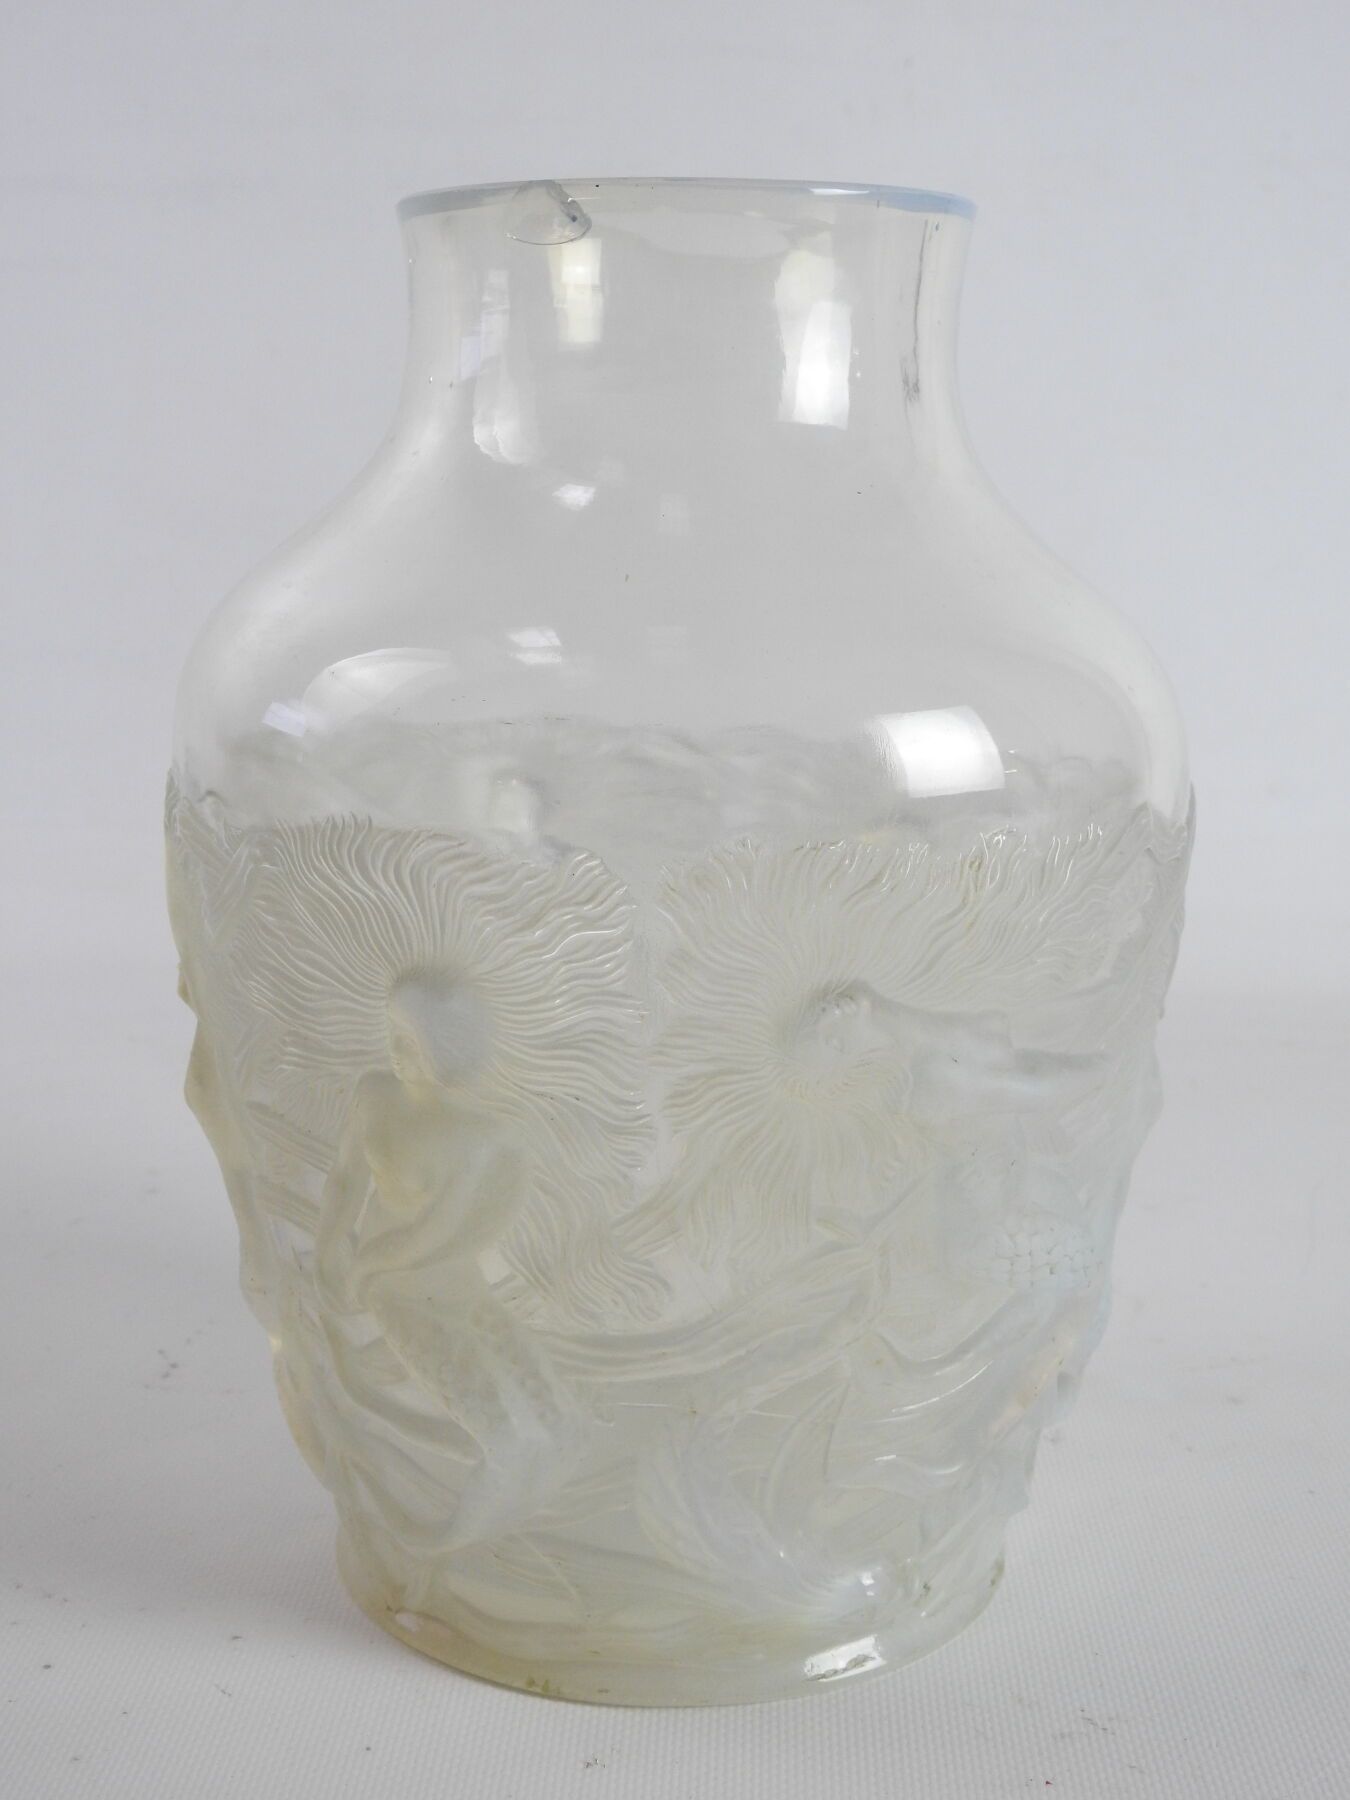 Null 法国VERLYS公司：乳白色的玻璃花瓶，有美人鱼和三叶草的浮雕装饰。高度：25厘米（筹码）